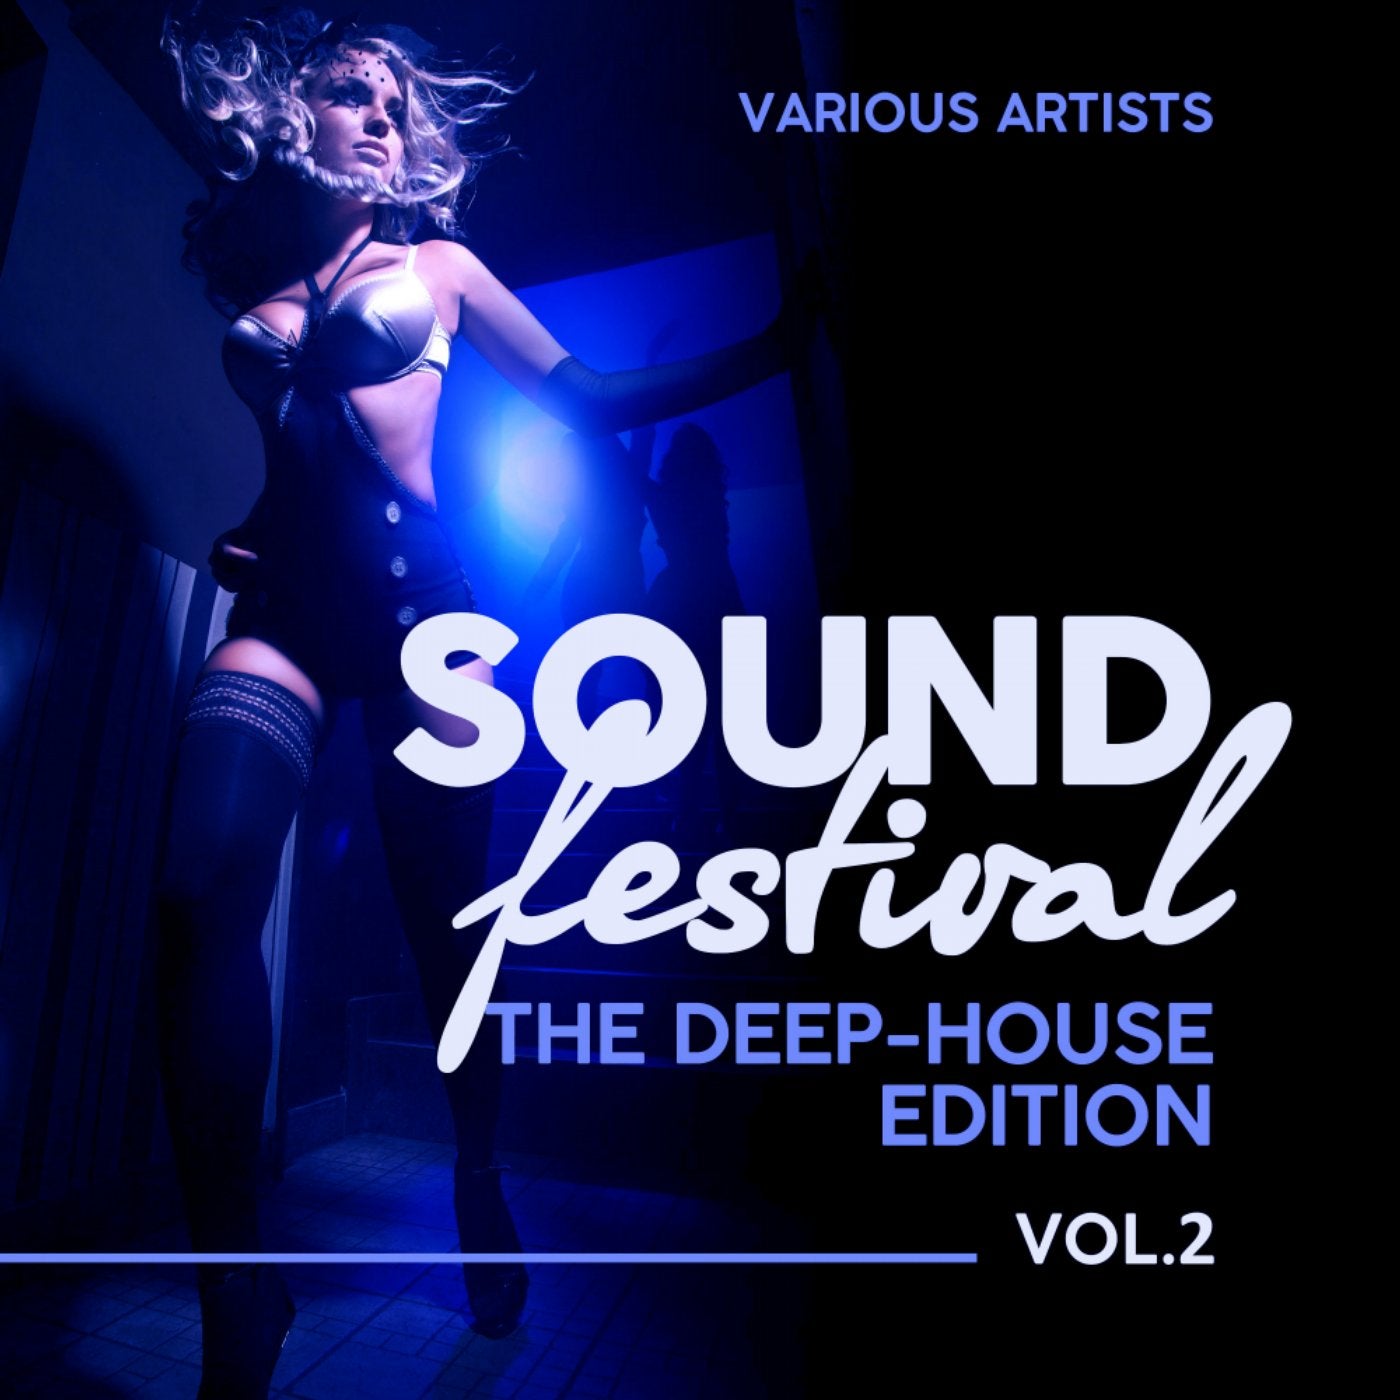 Sound Festival (The Deep-House Edition), Vol. 2